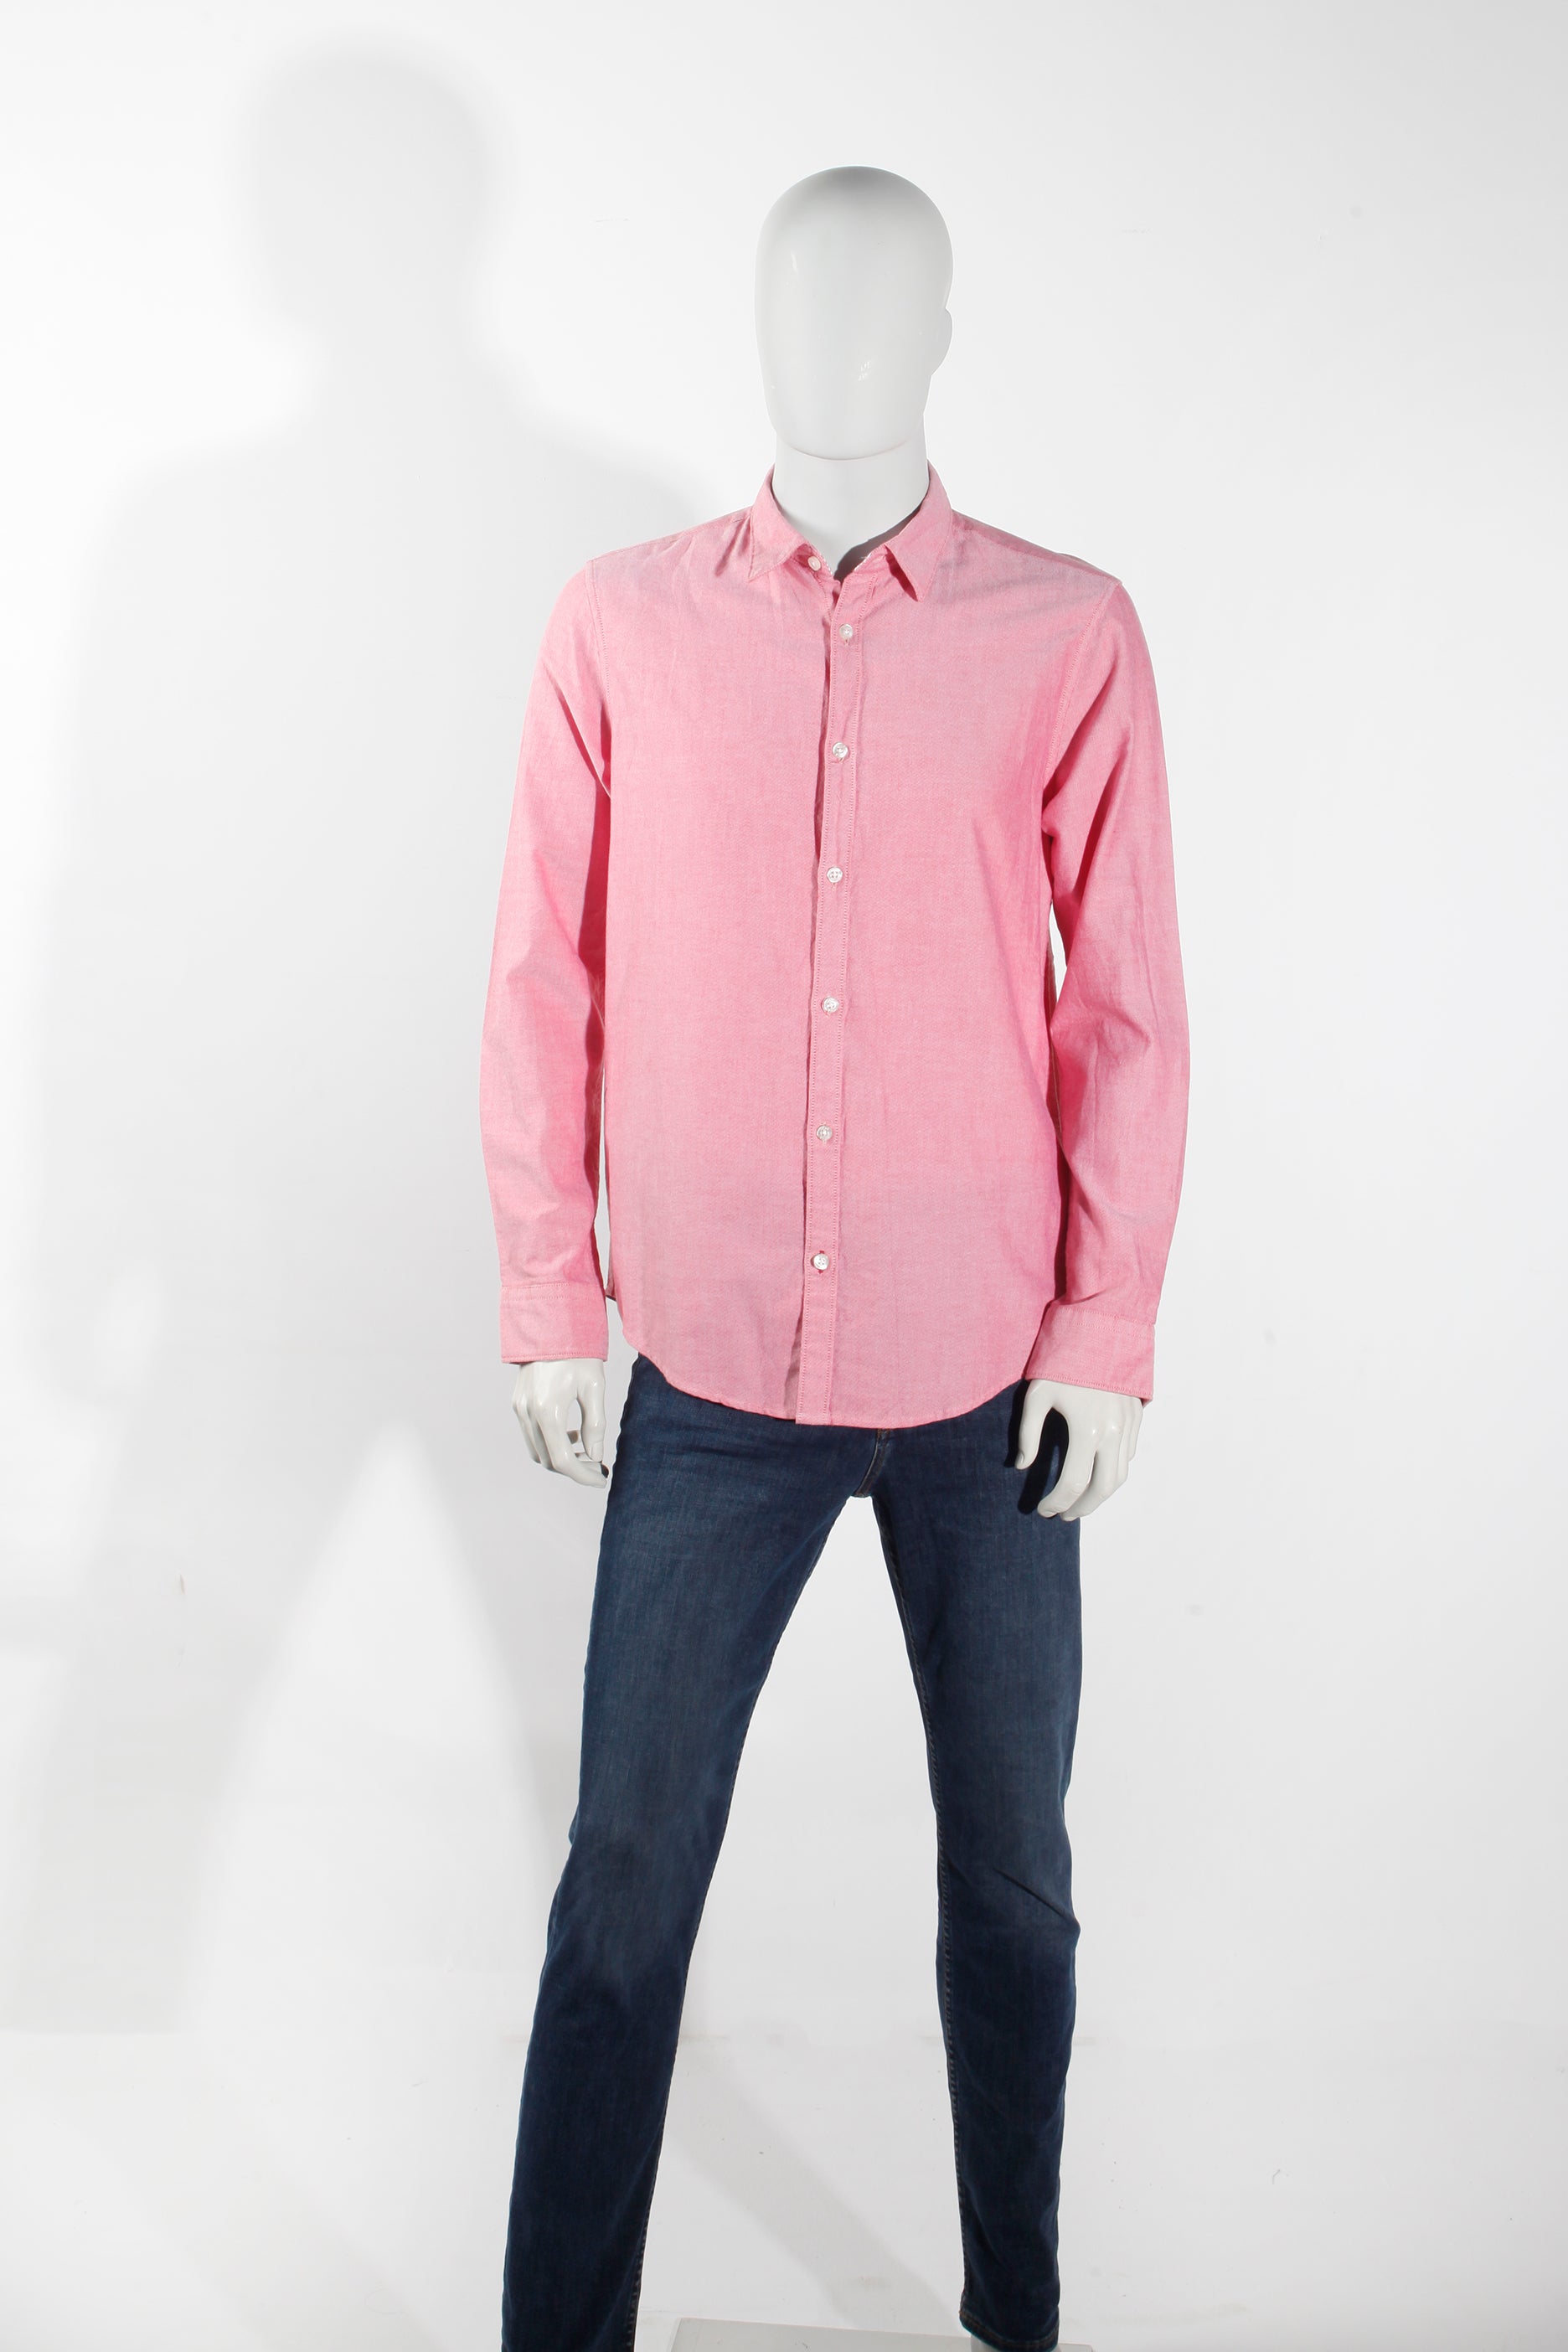 Men's Pink Shirt (Medium)